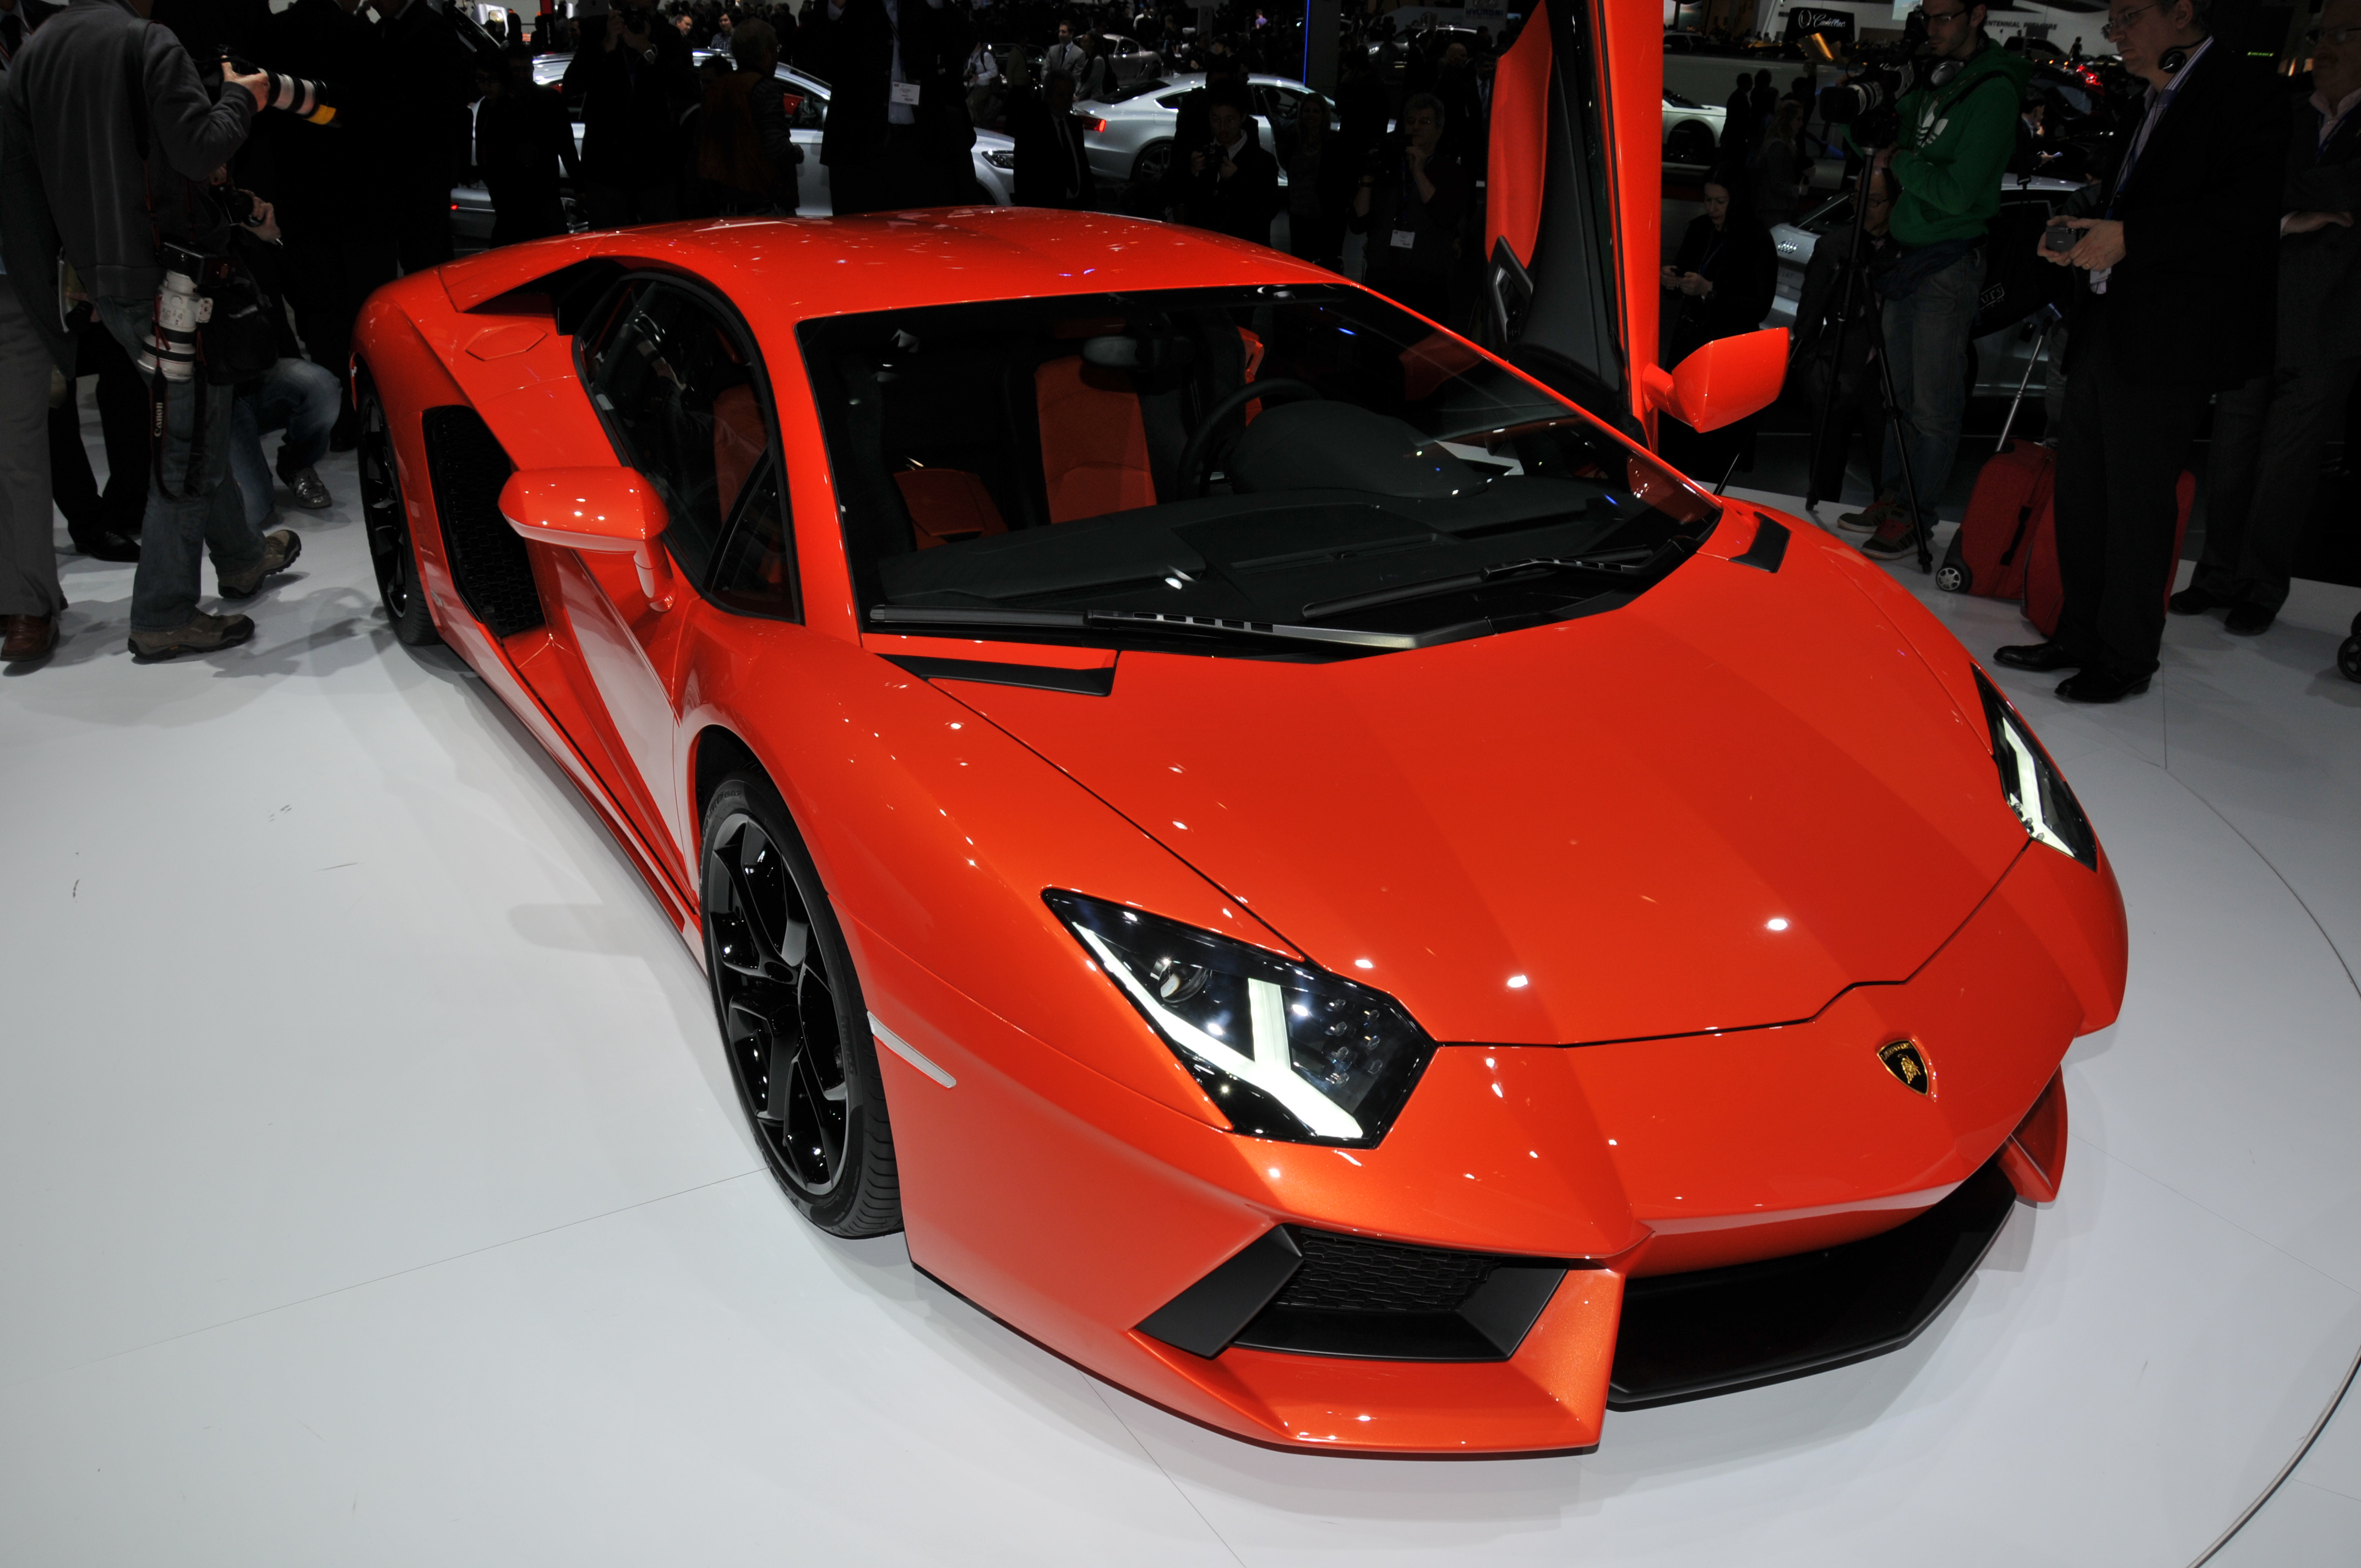 Commons:A. 2011 Lamborghini Aventador (5488708138).jpg. 